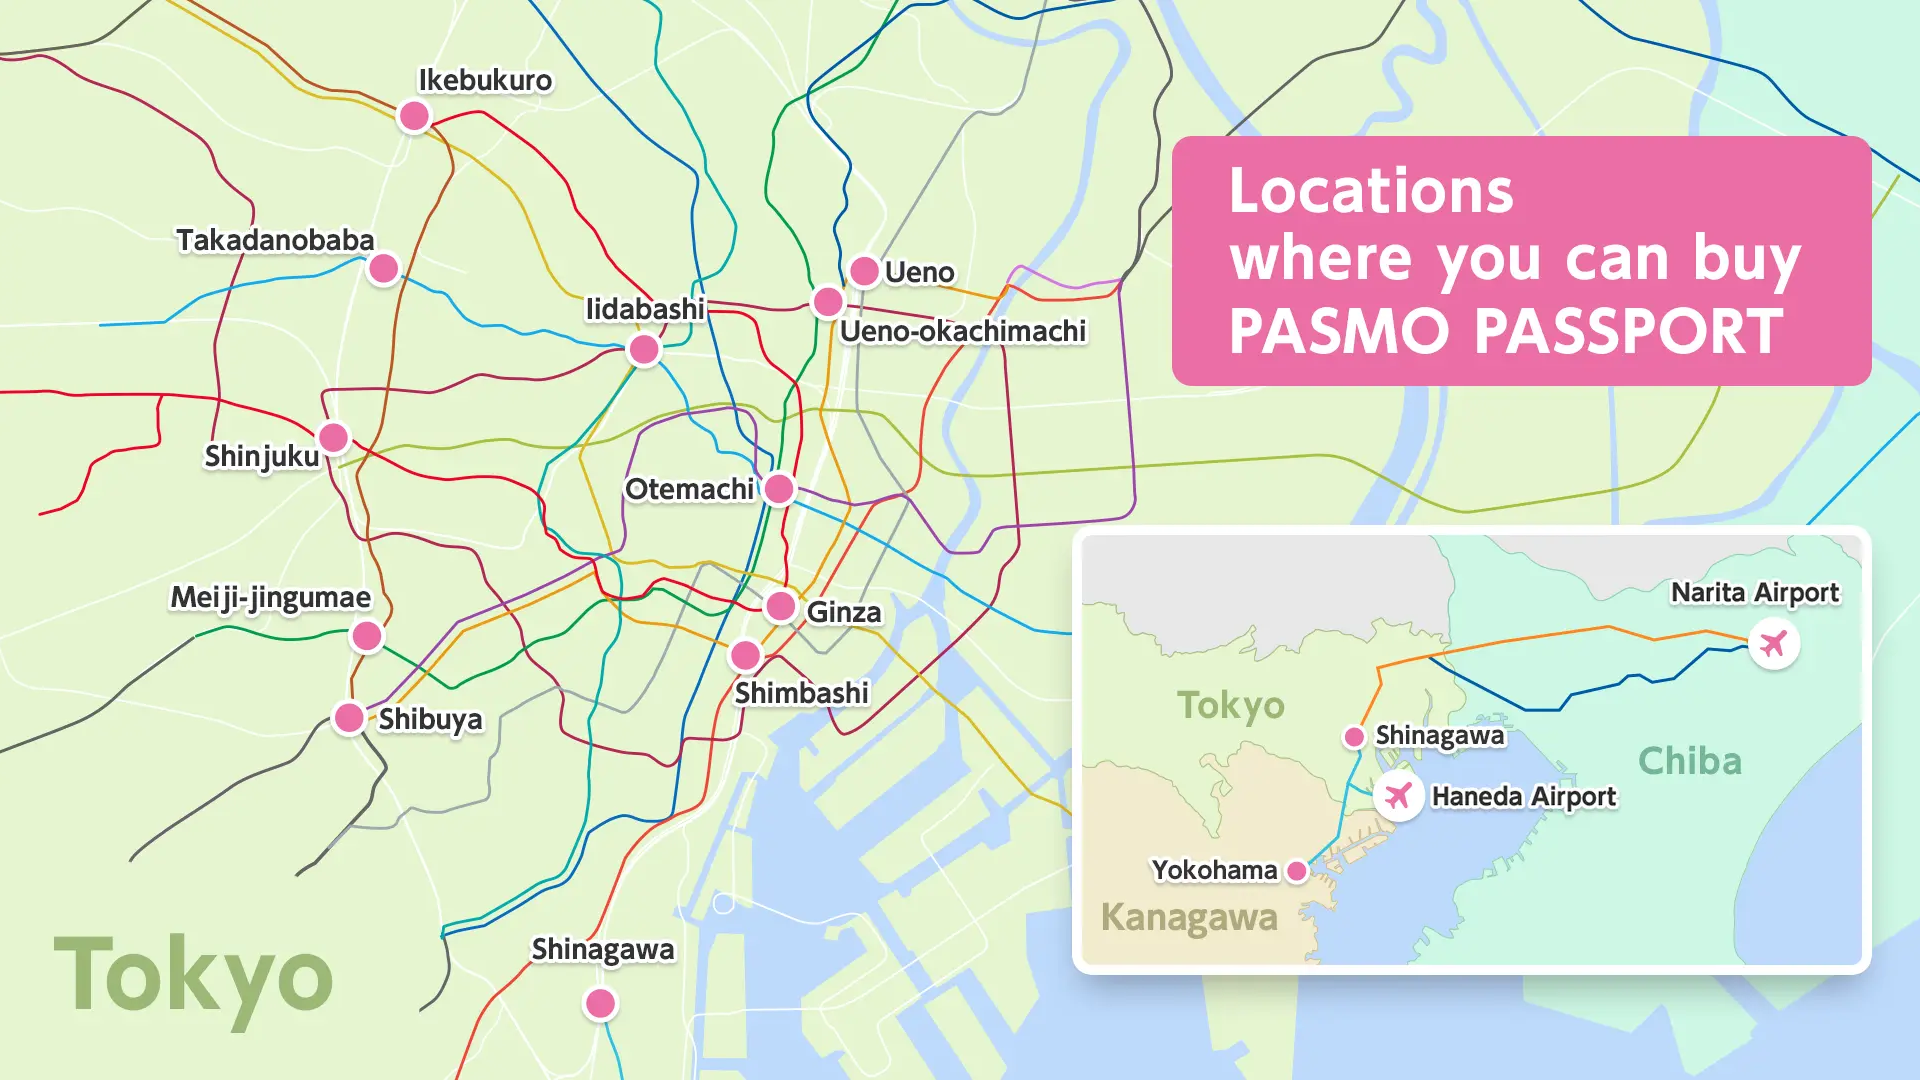 PASMO PASSPORT Sales Locations